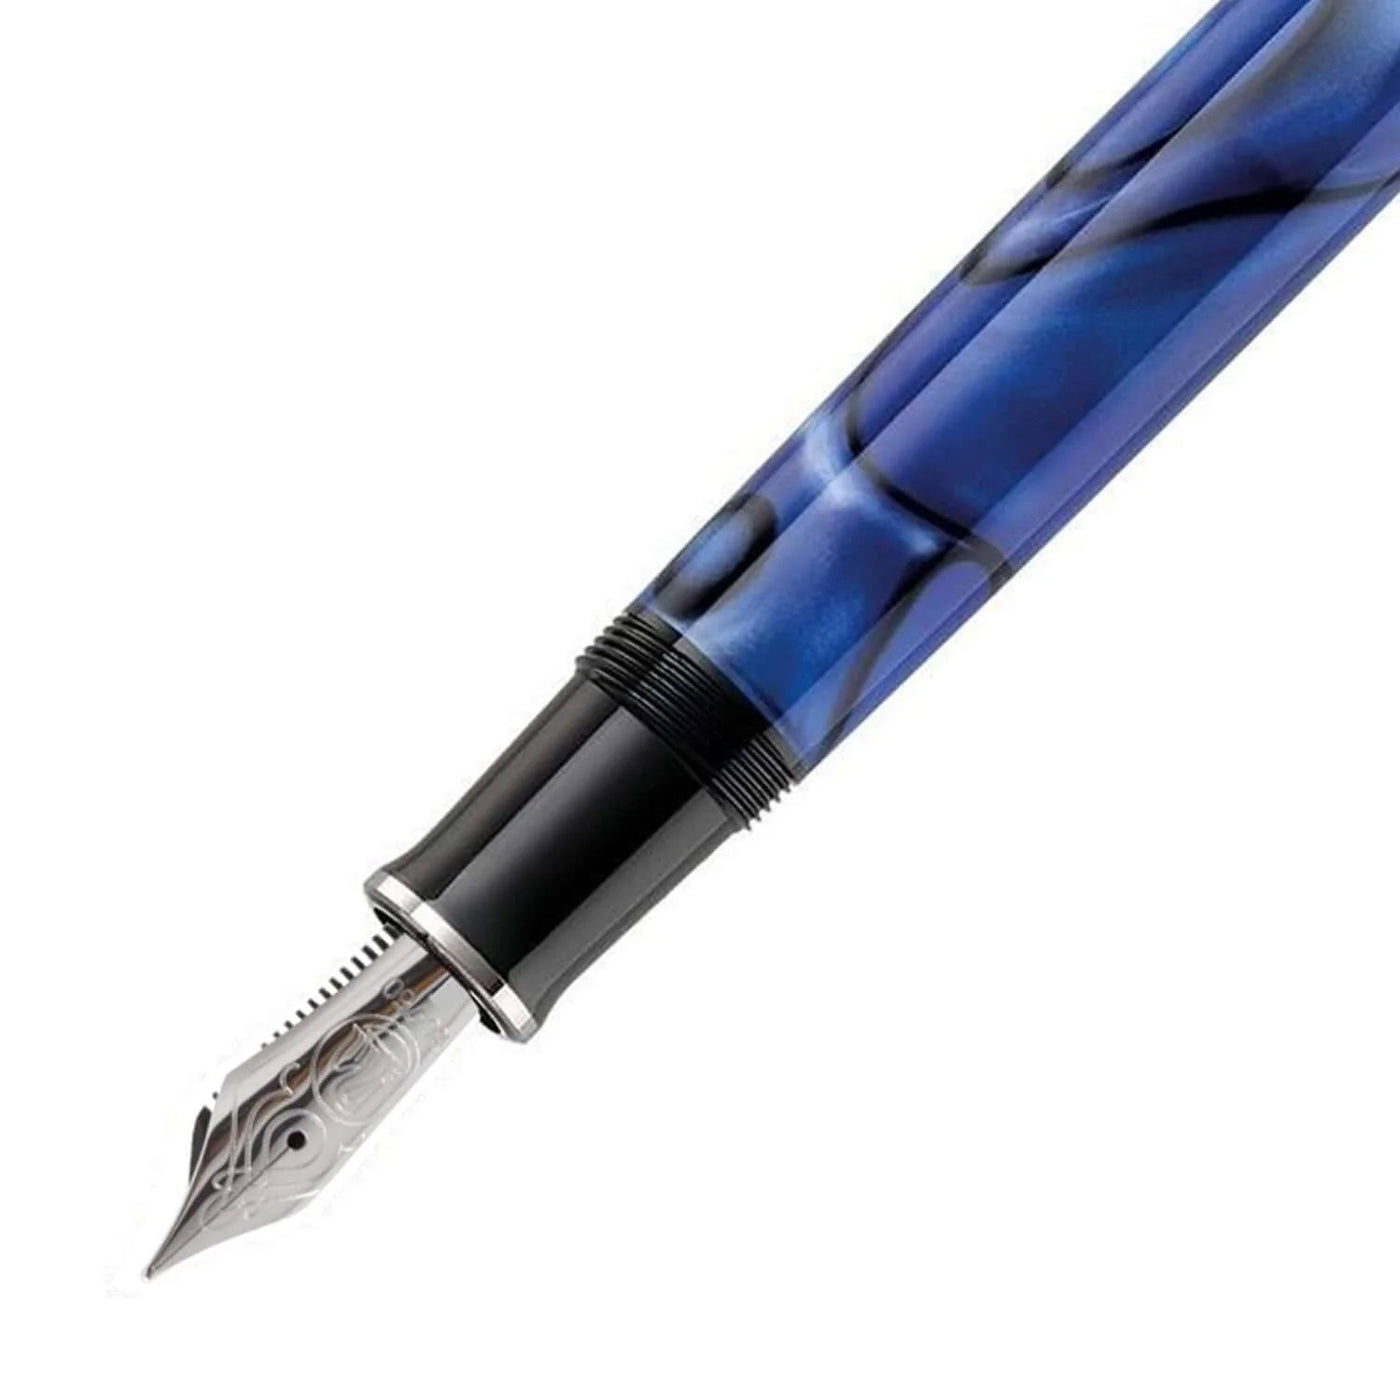 Pelikan M805 Fountain Pen - Blue Dunes (Special Edition)